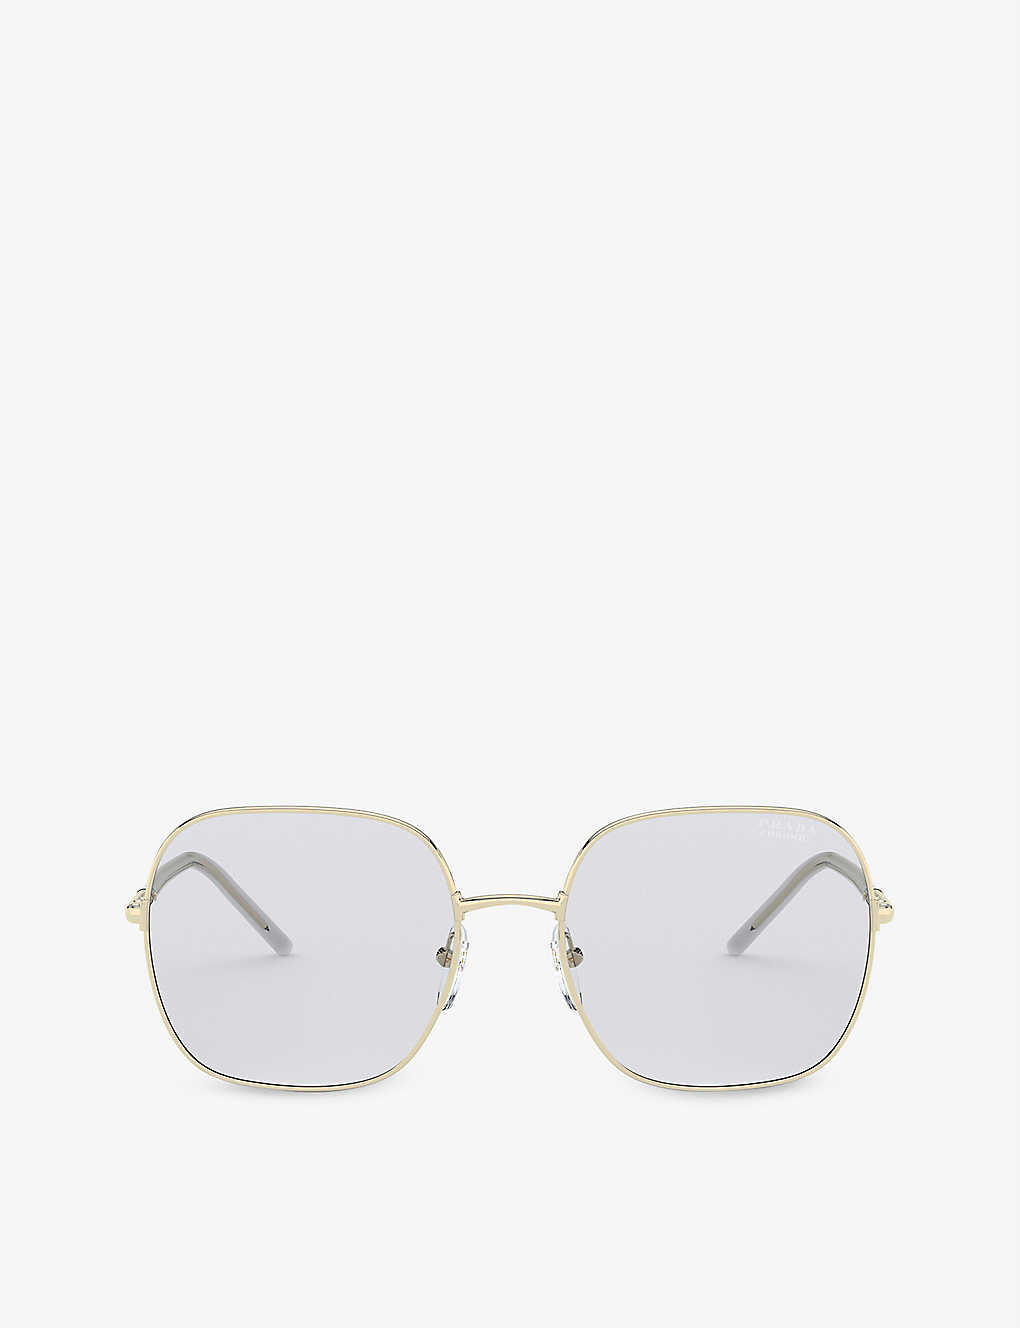 PR 67XS 58 rectangle-frame gold-tone metal sunglasses(9000870)